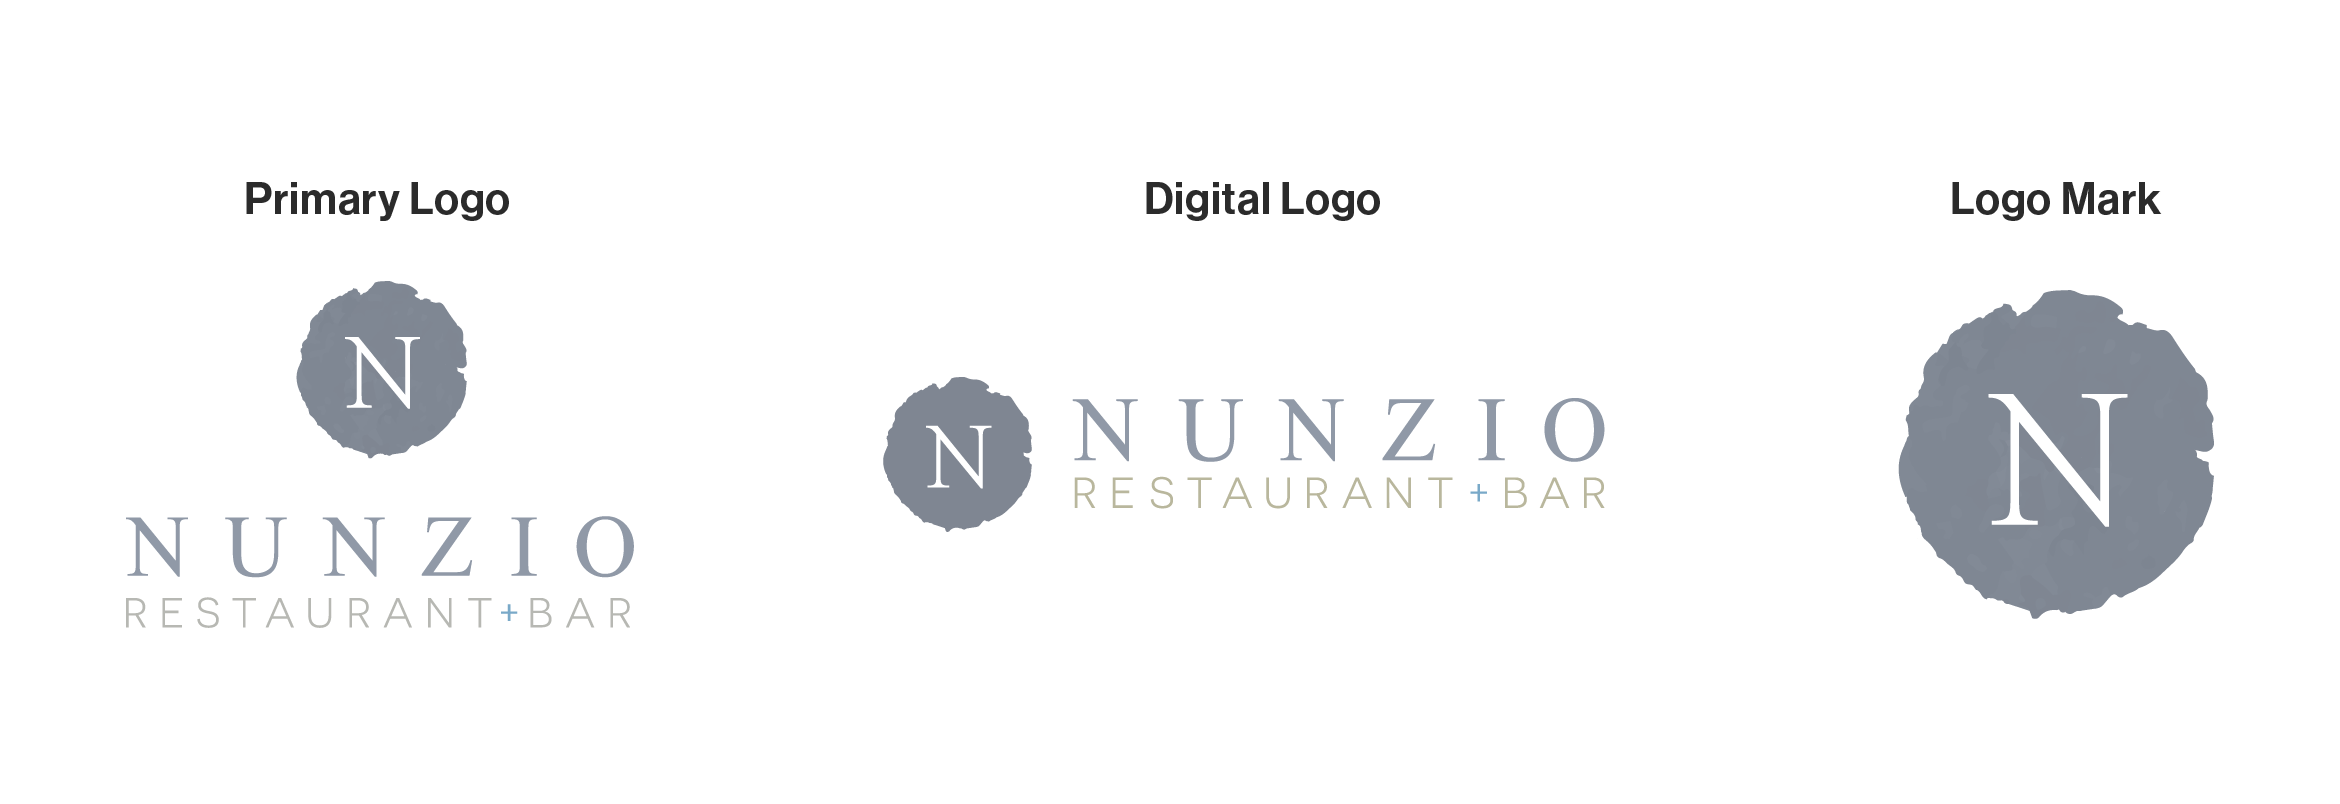 Nunzio_Responsive_logo_system_3@2x